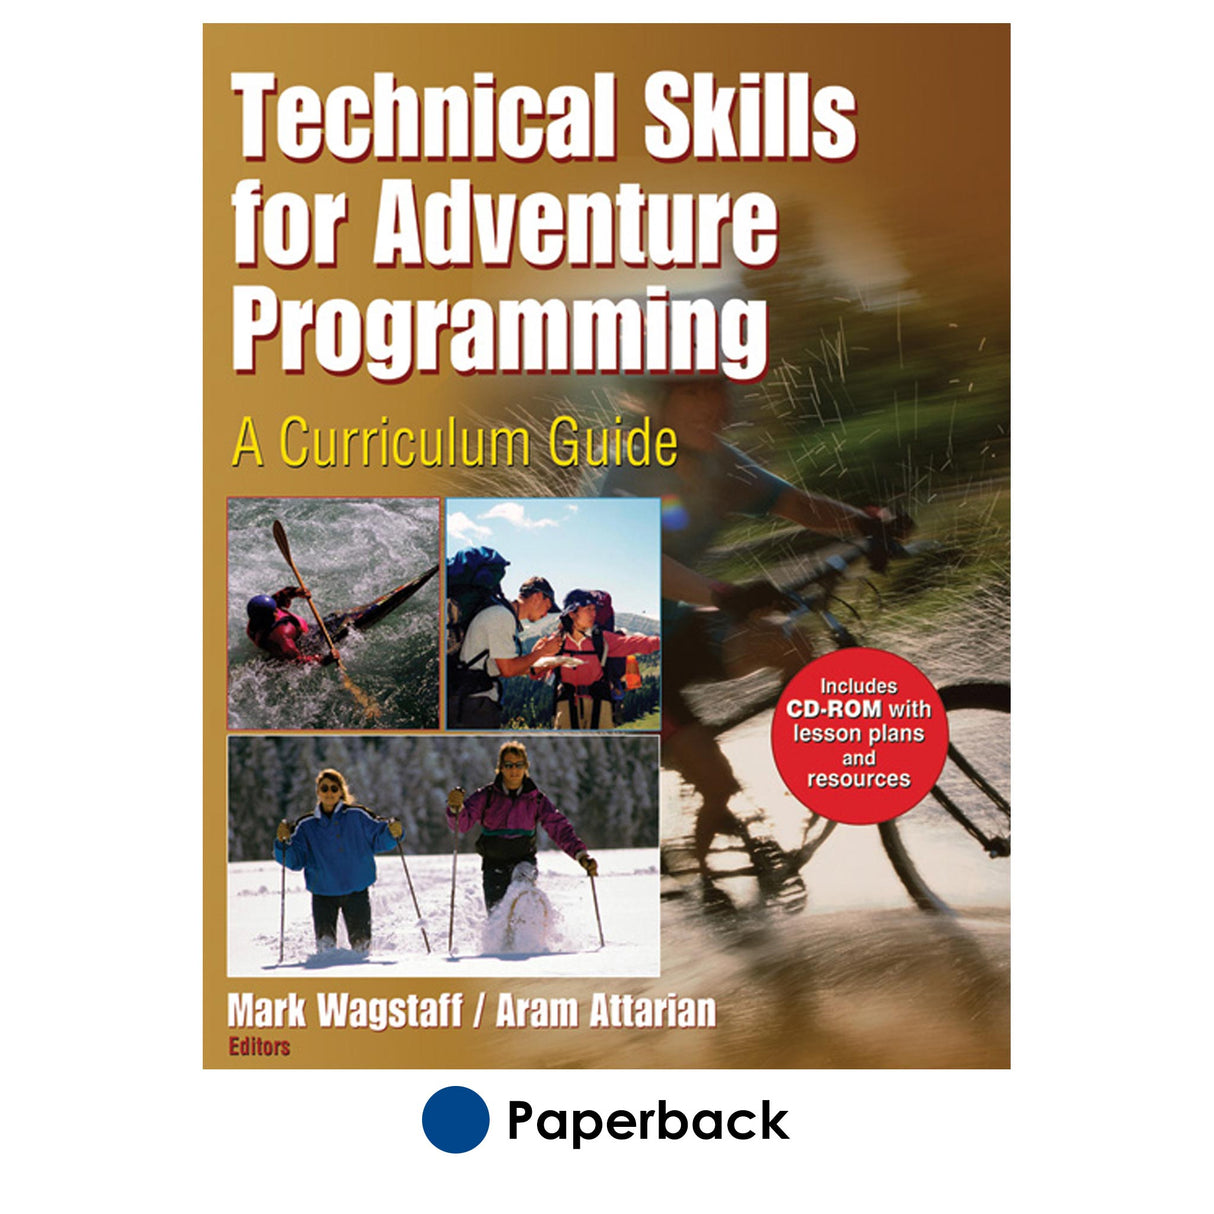 Technical Skills for Adventure Programming